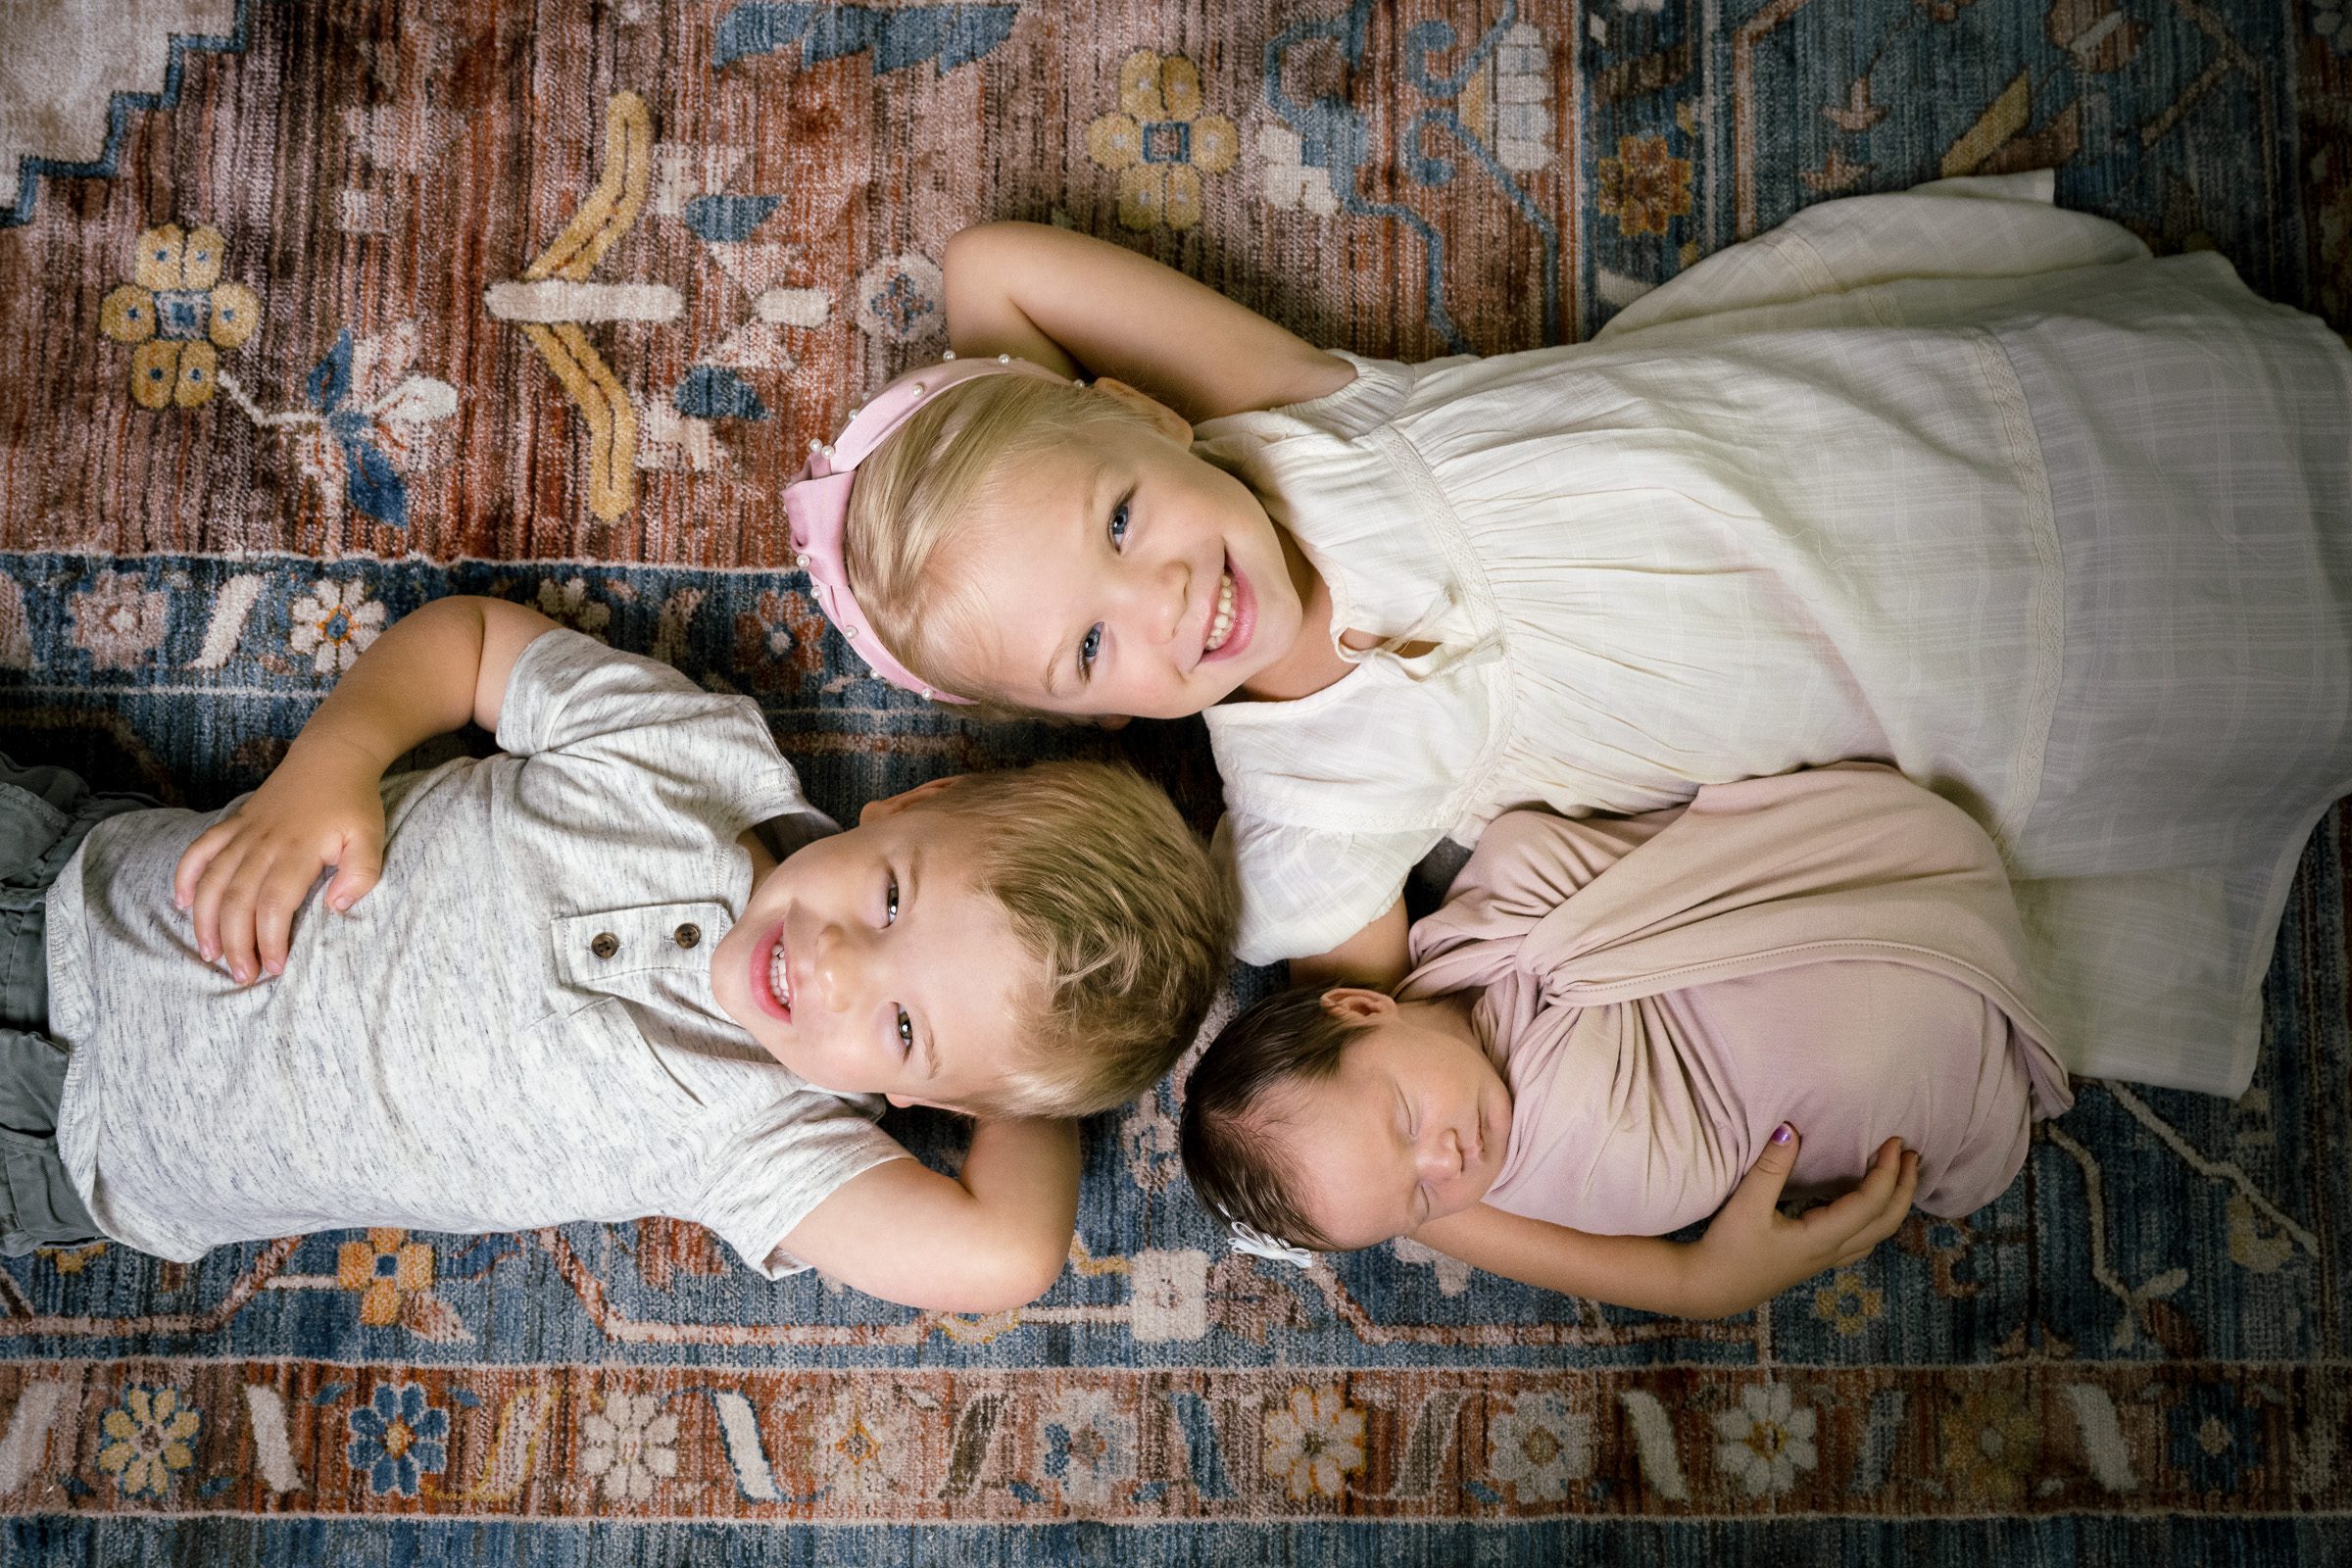 boy, girl and newborn laying on floor